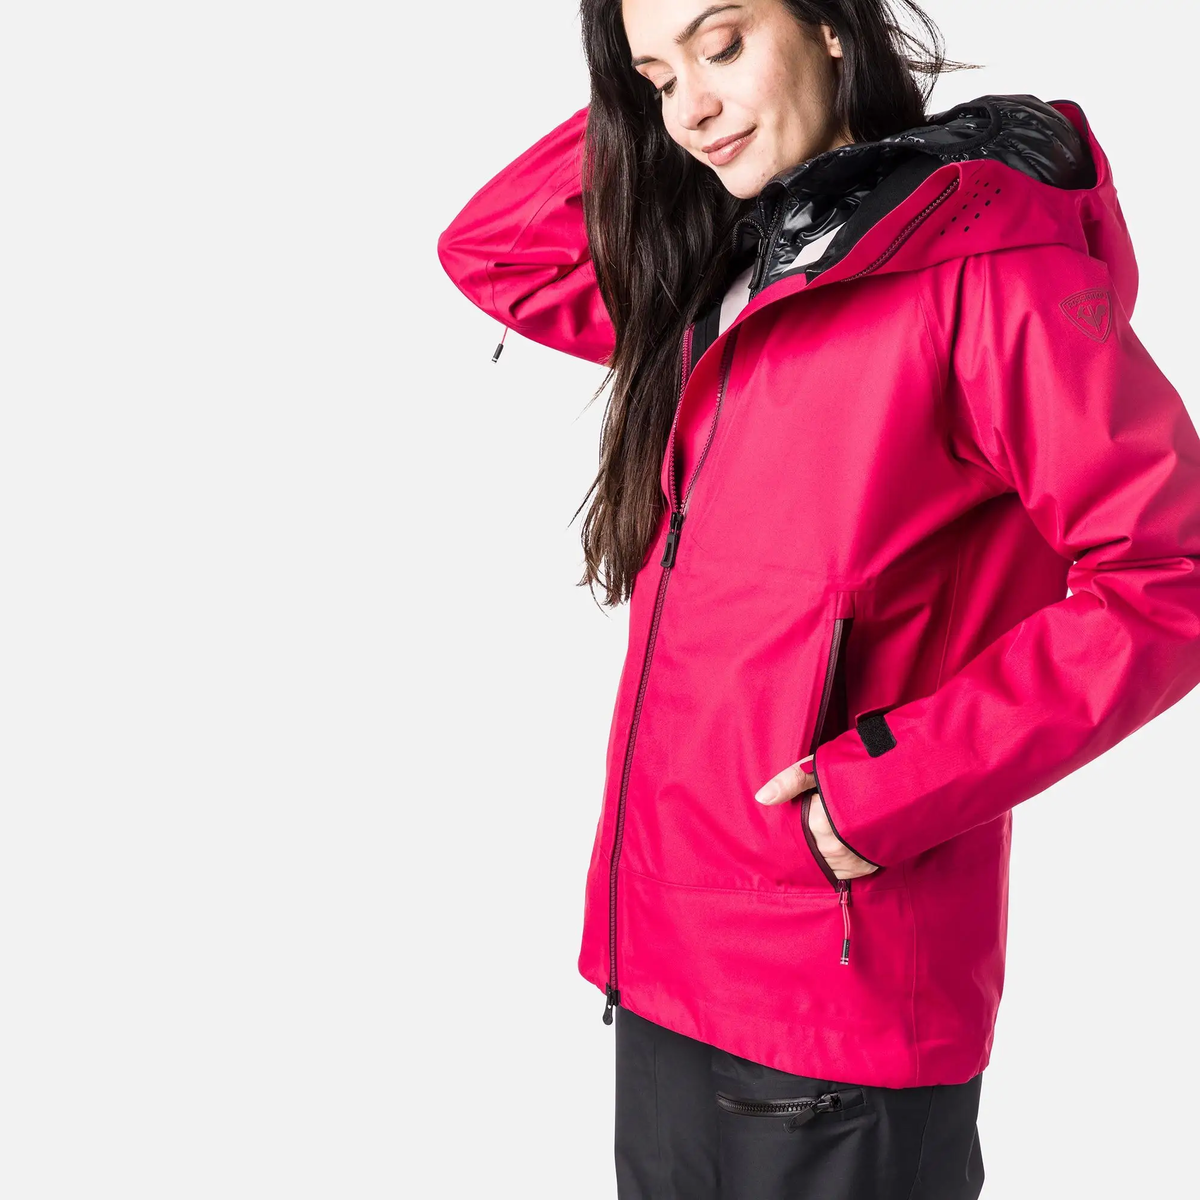 Obsessie bon Vast en zeker Rossignol SKPR 3L ski jas roze dames – Snowsuits